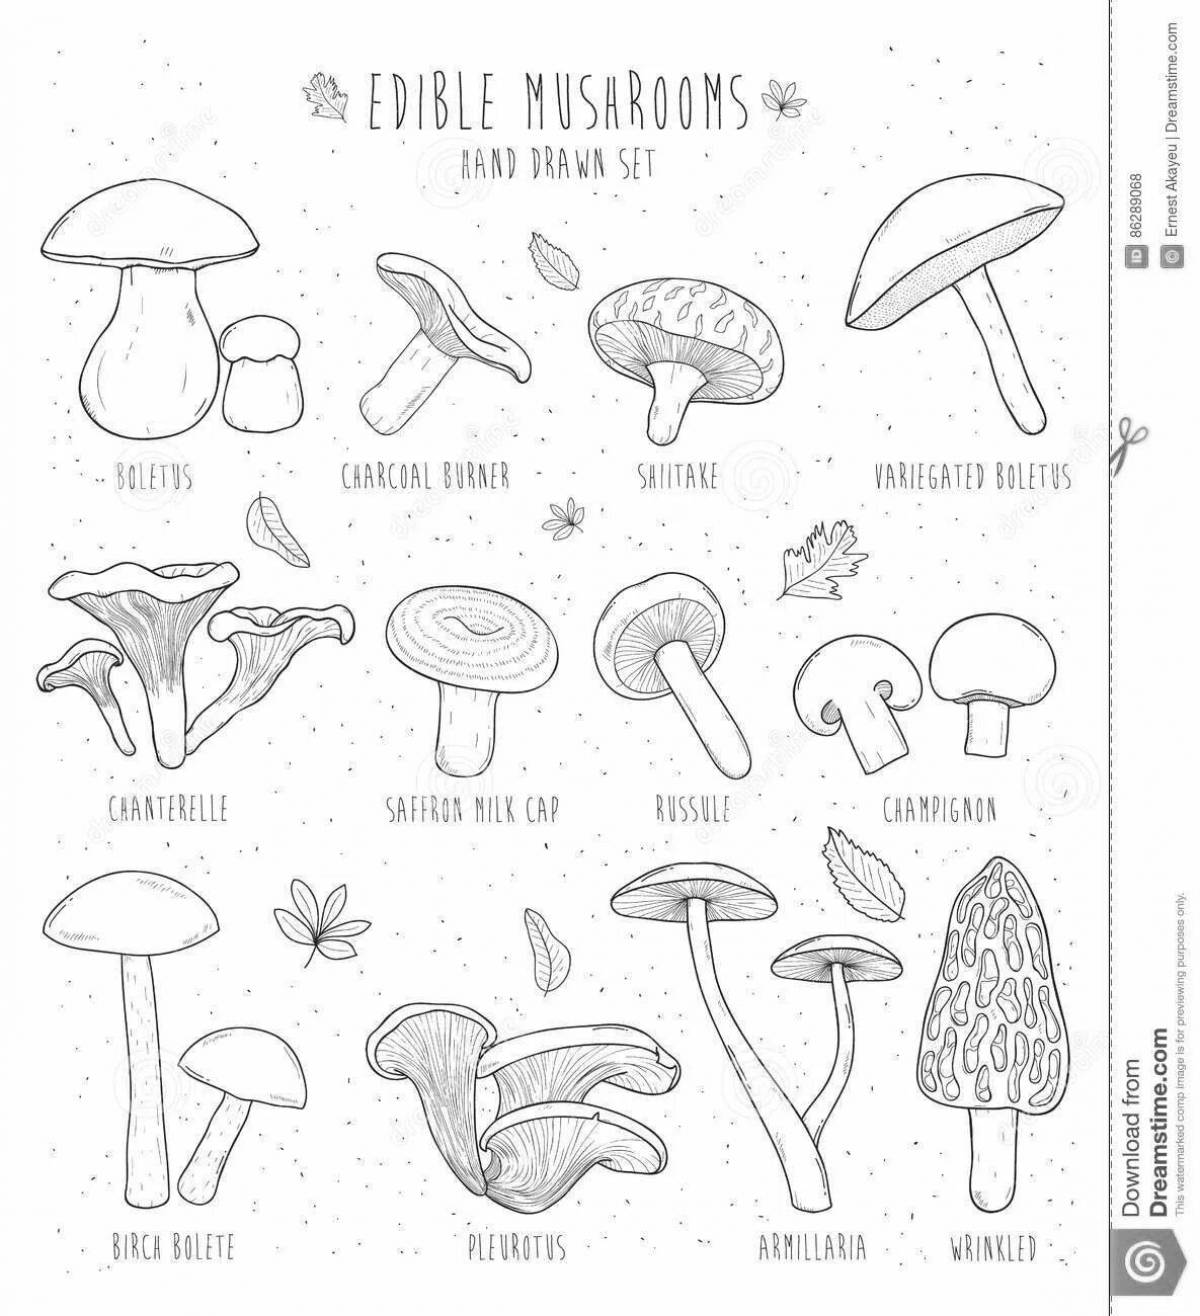 Grand inedible mushrooms